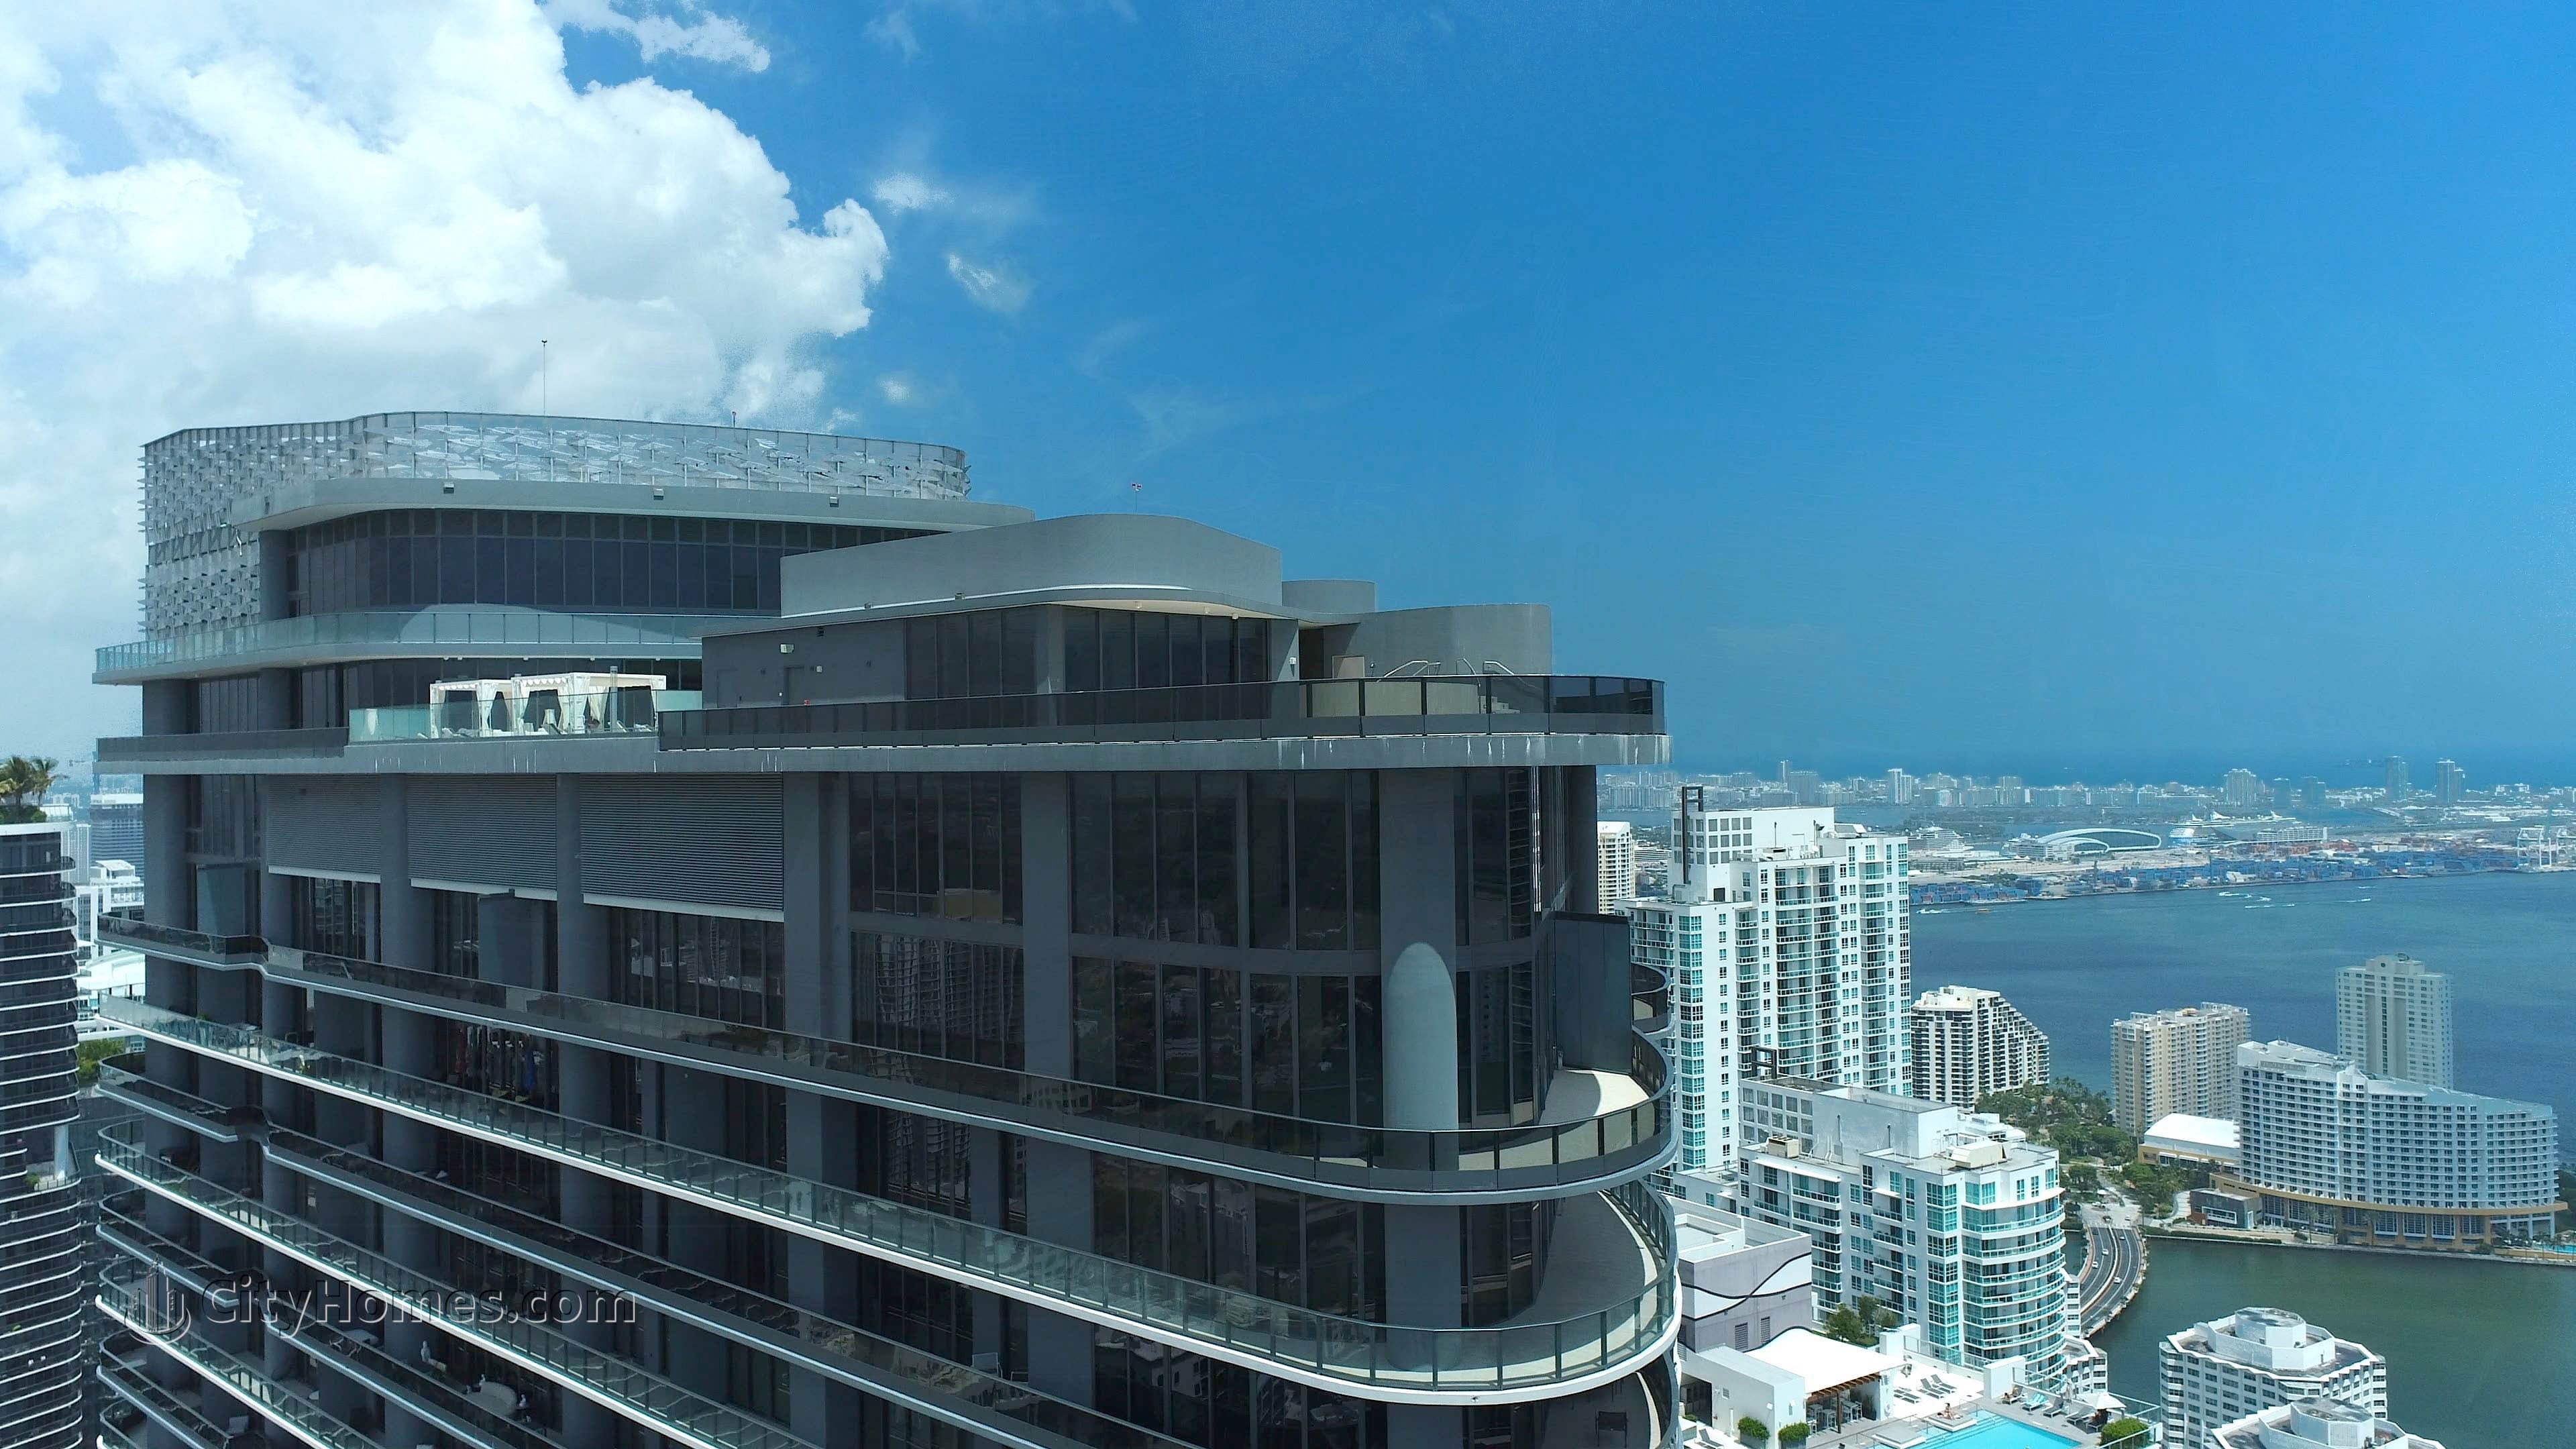 3. Brickell Flatiron здание в 1000 Brickell Plaza, Brickell, Miami, FL 33130